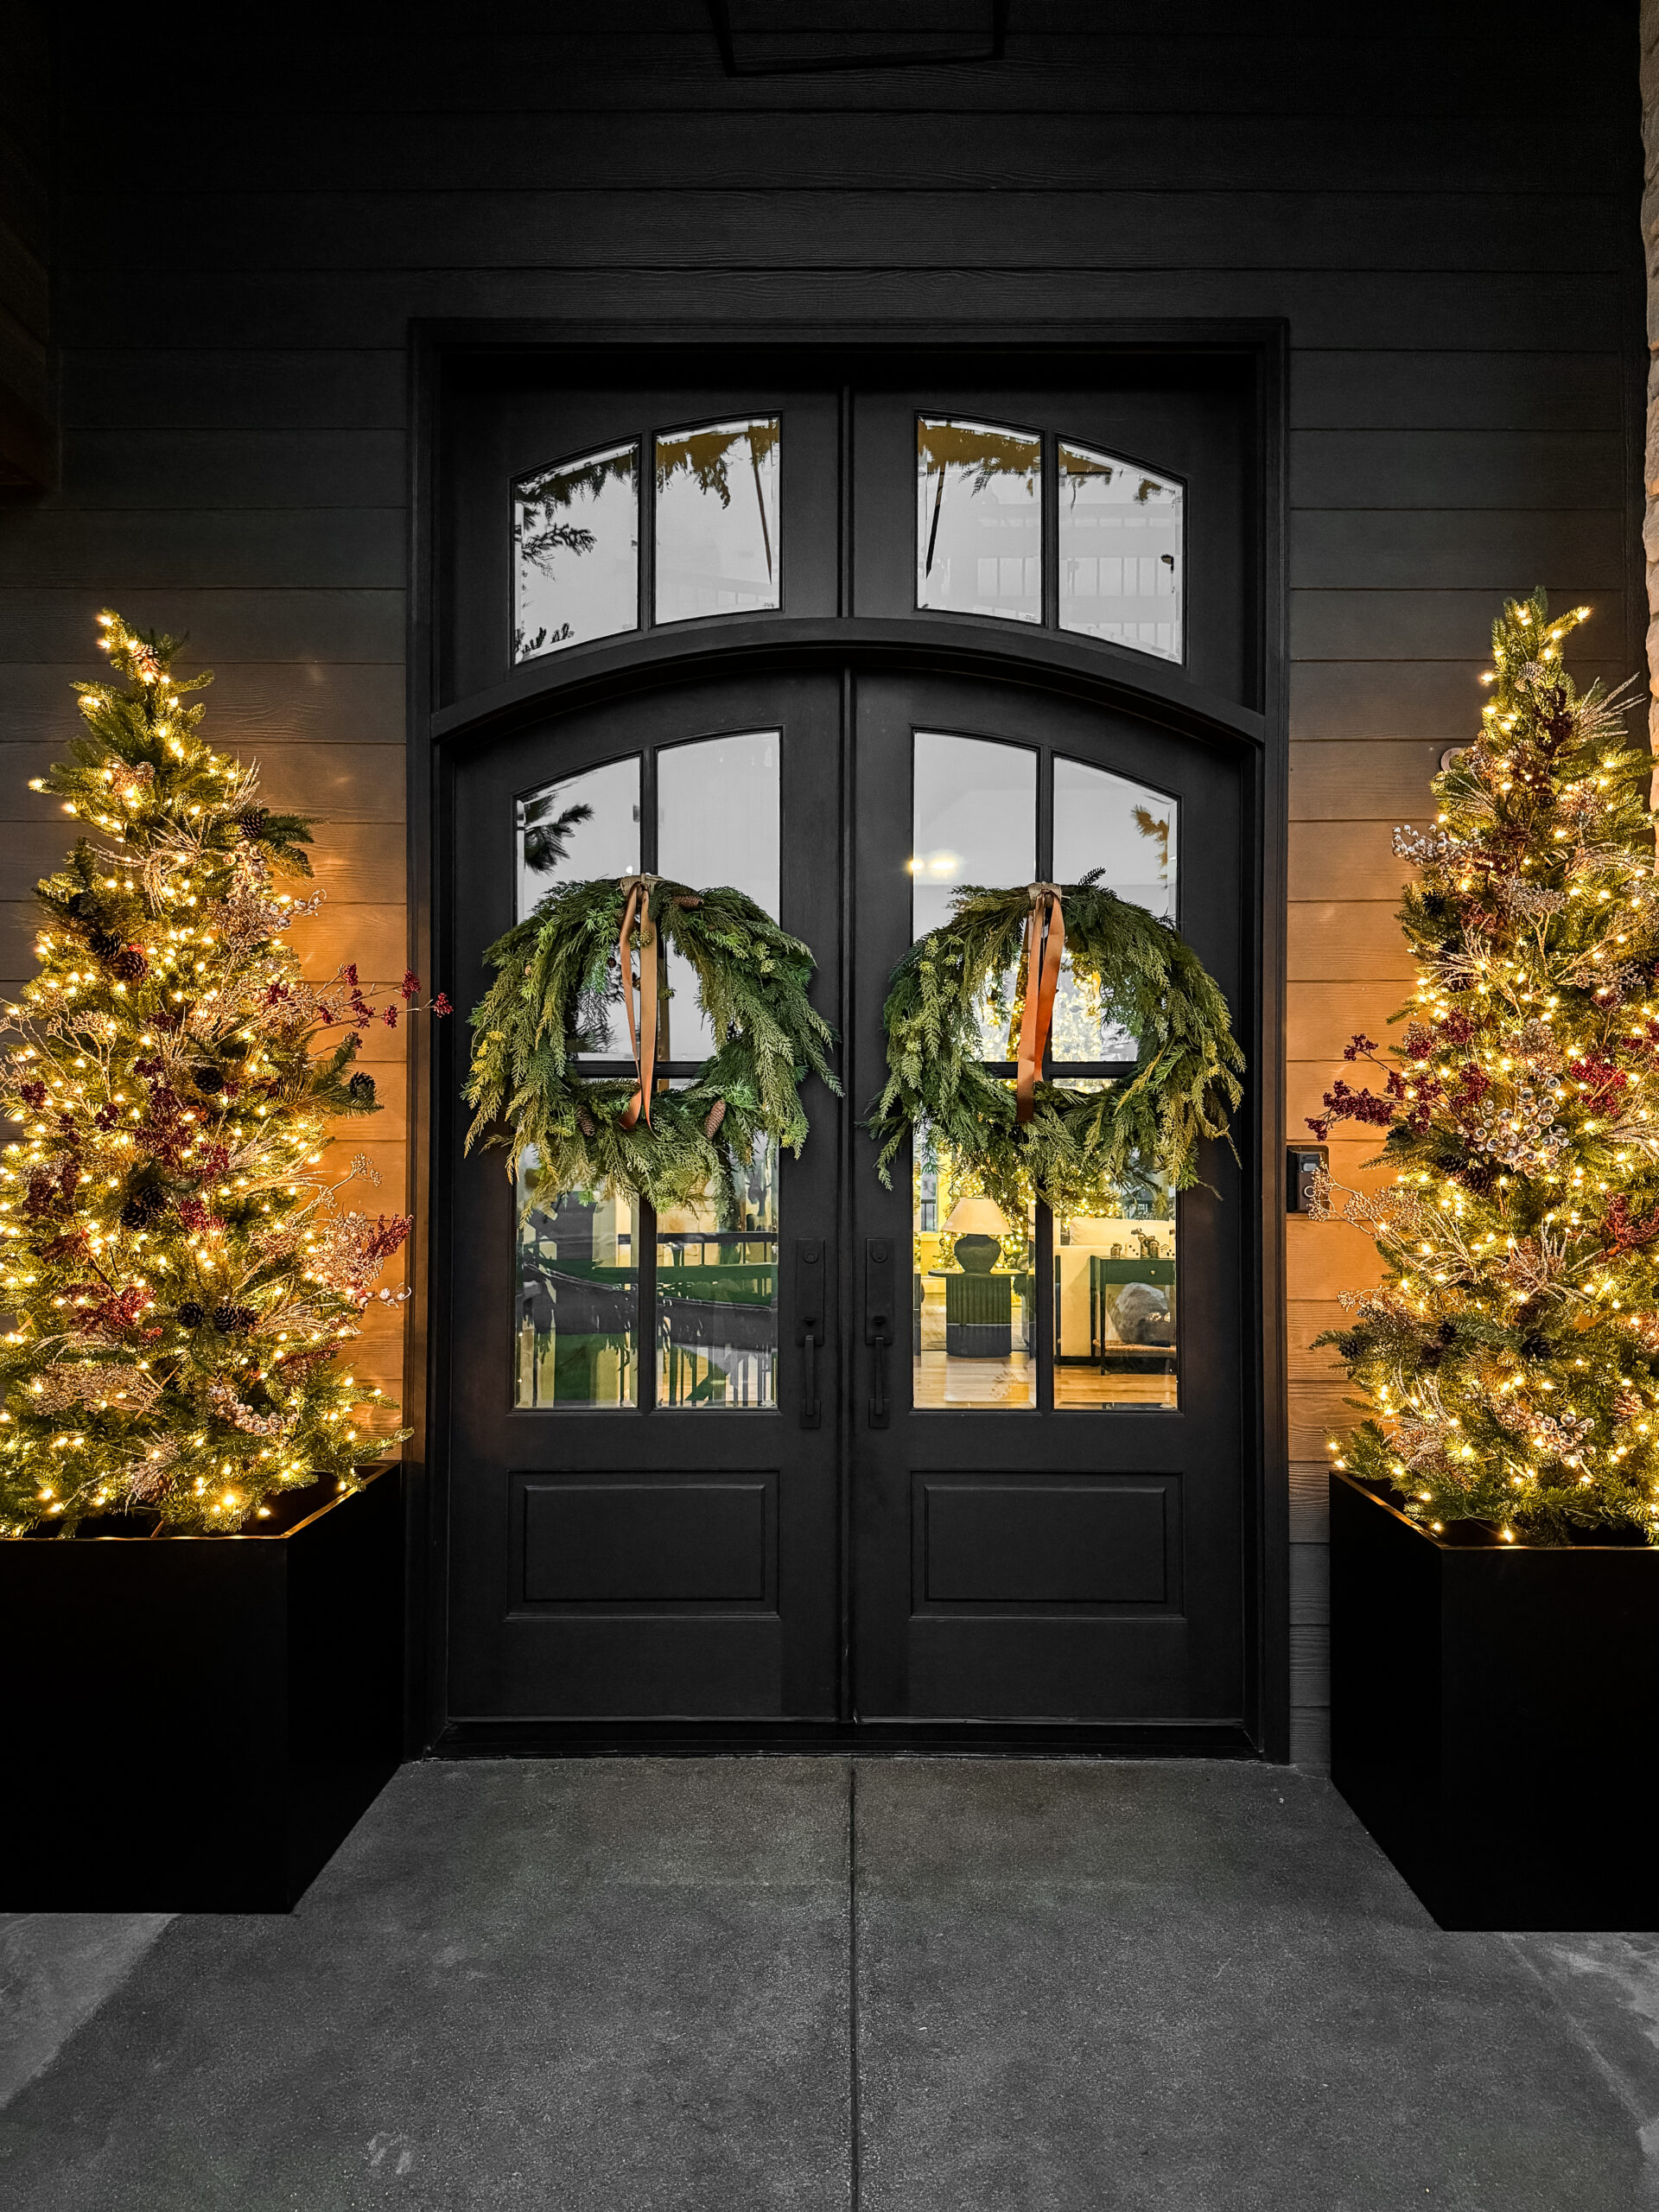 holiday home edit | my front porch | #holiday #holidayhome #holidayhomeedit #frontporch #christmas #christmastree #wreath #ribbon #lights #greenery #bells #jinglebells #frontdoor